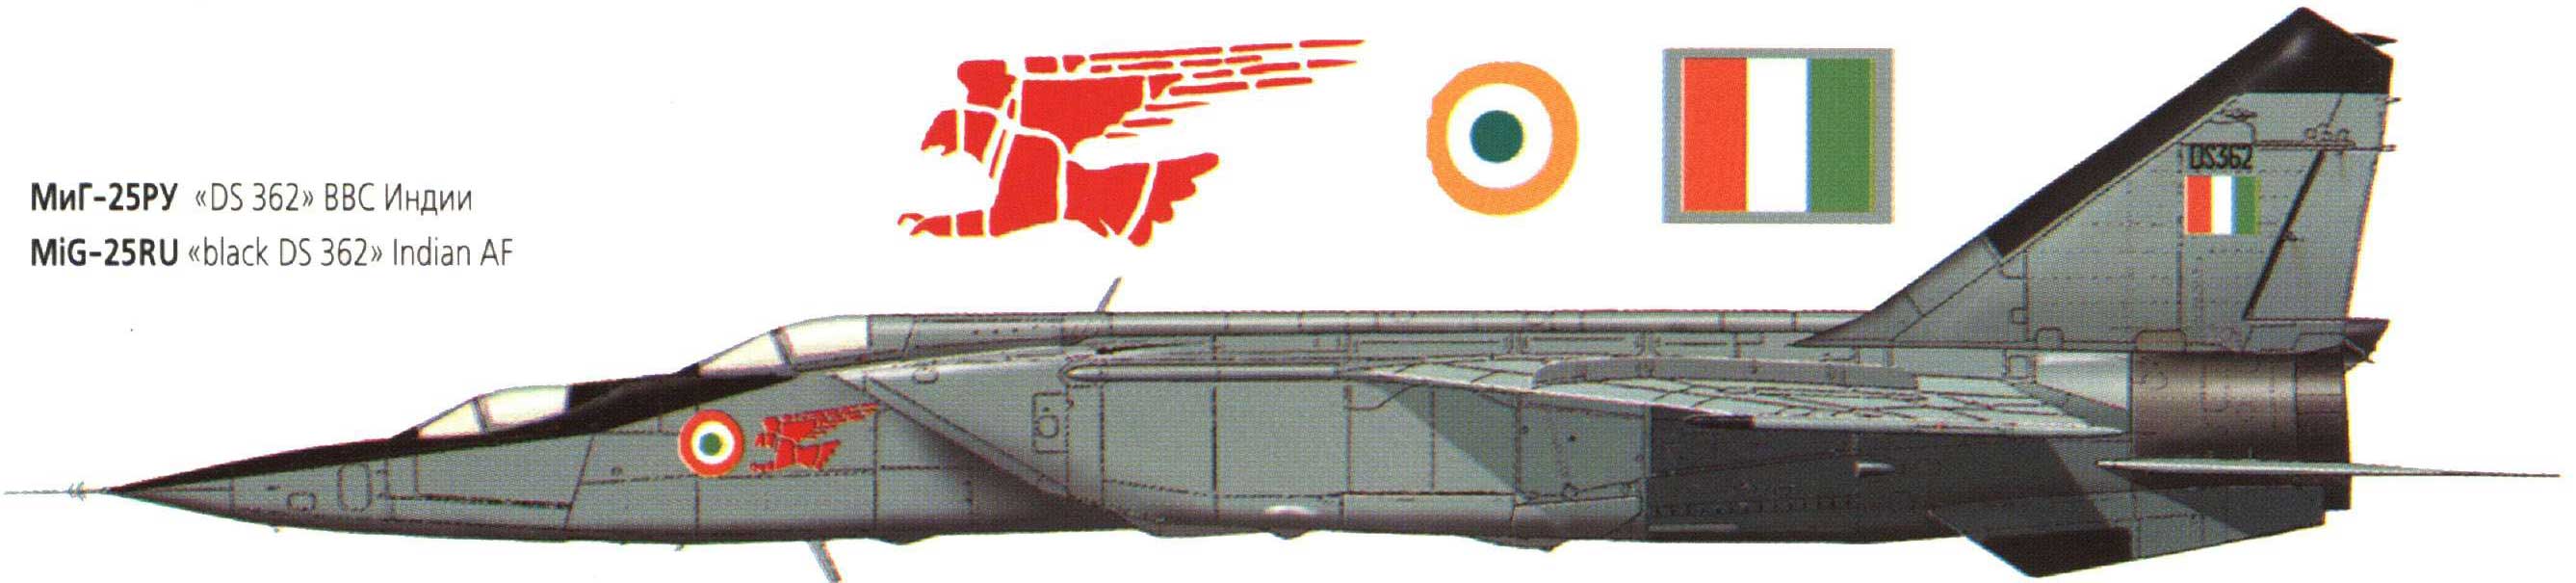 MIG-25 Foxbat (4)